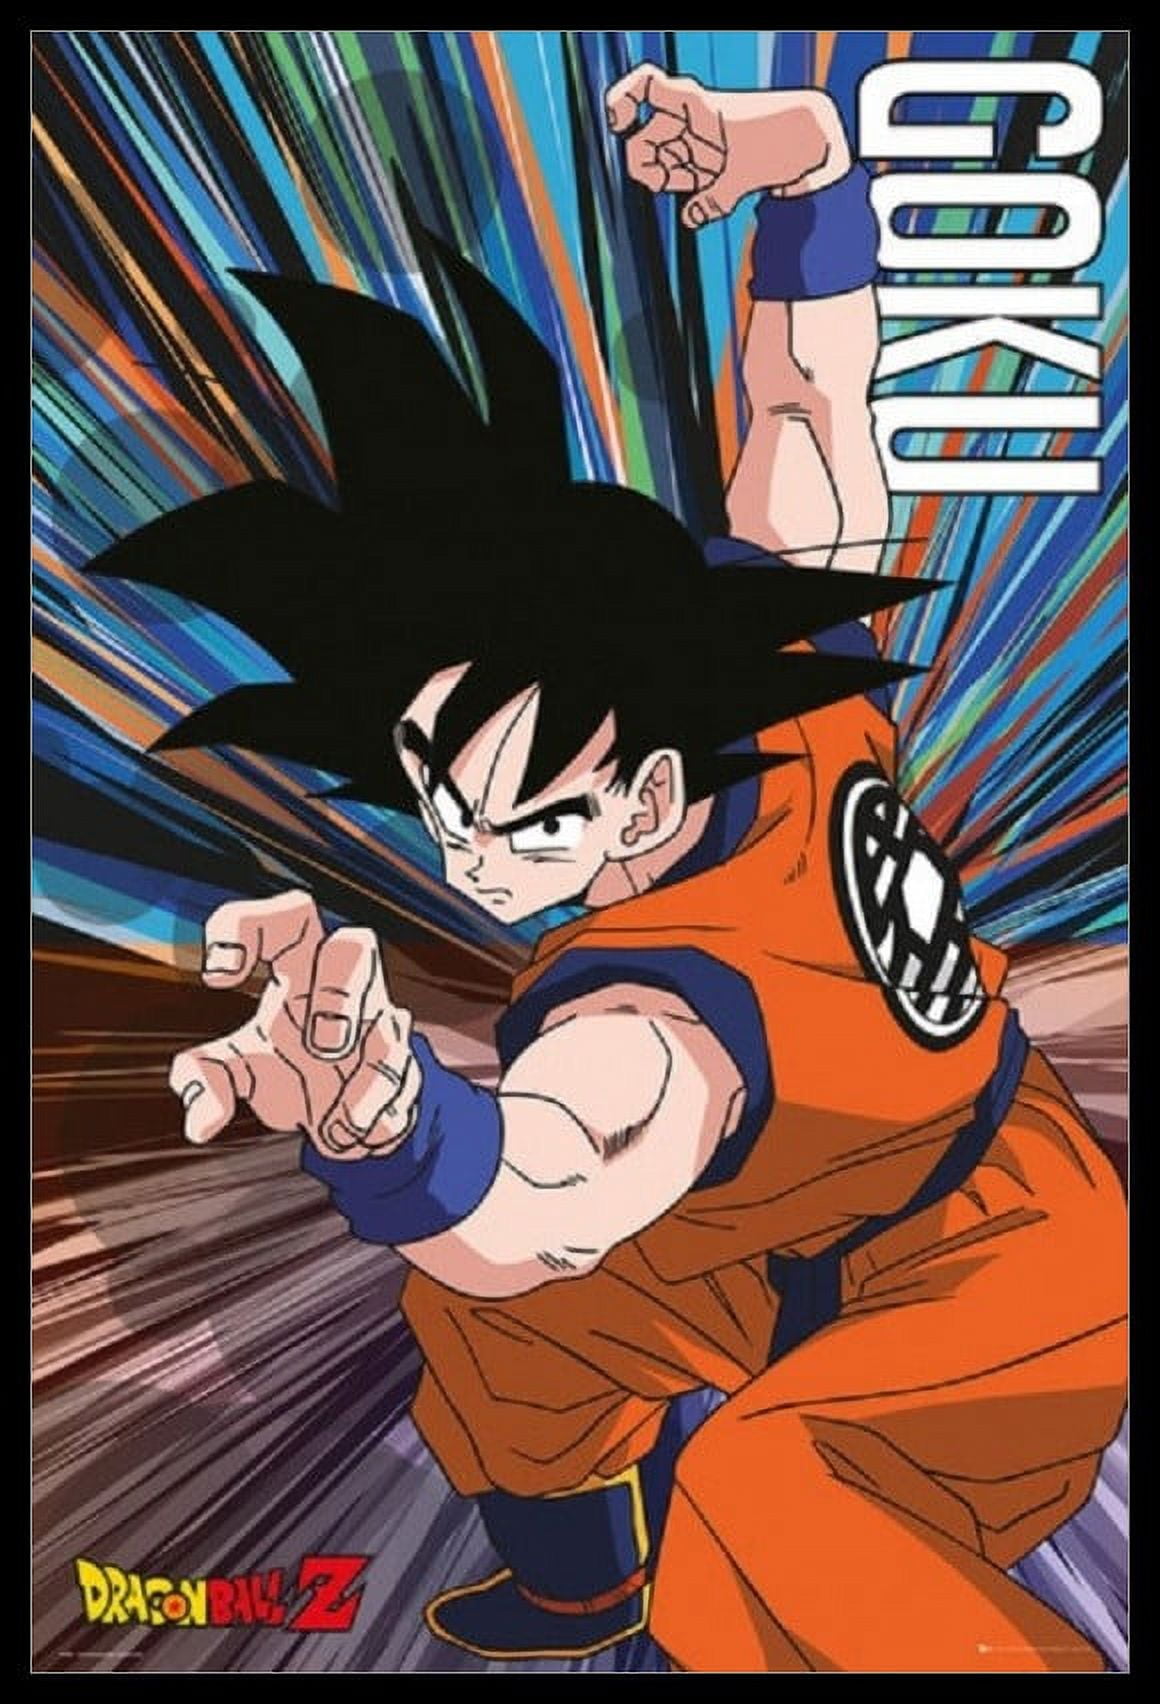 Goku Dragon Ball Z Hd Matte Finish Poster Paper Print - Animation